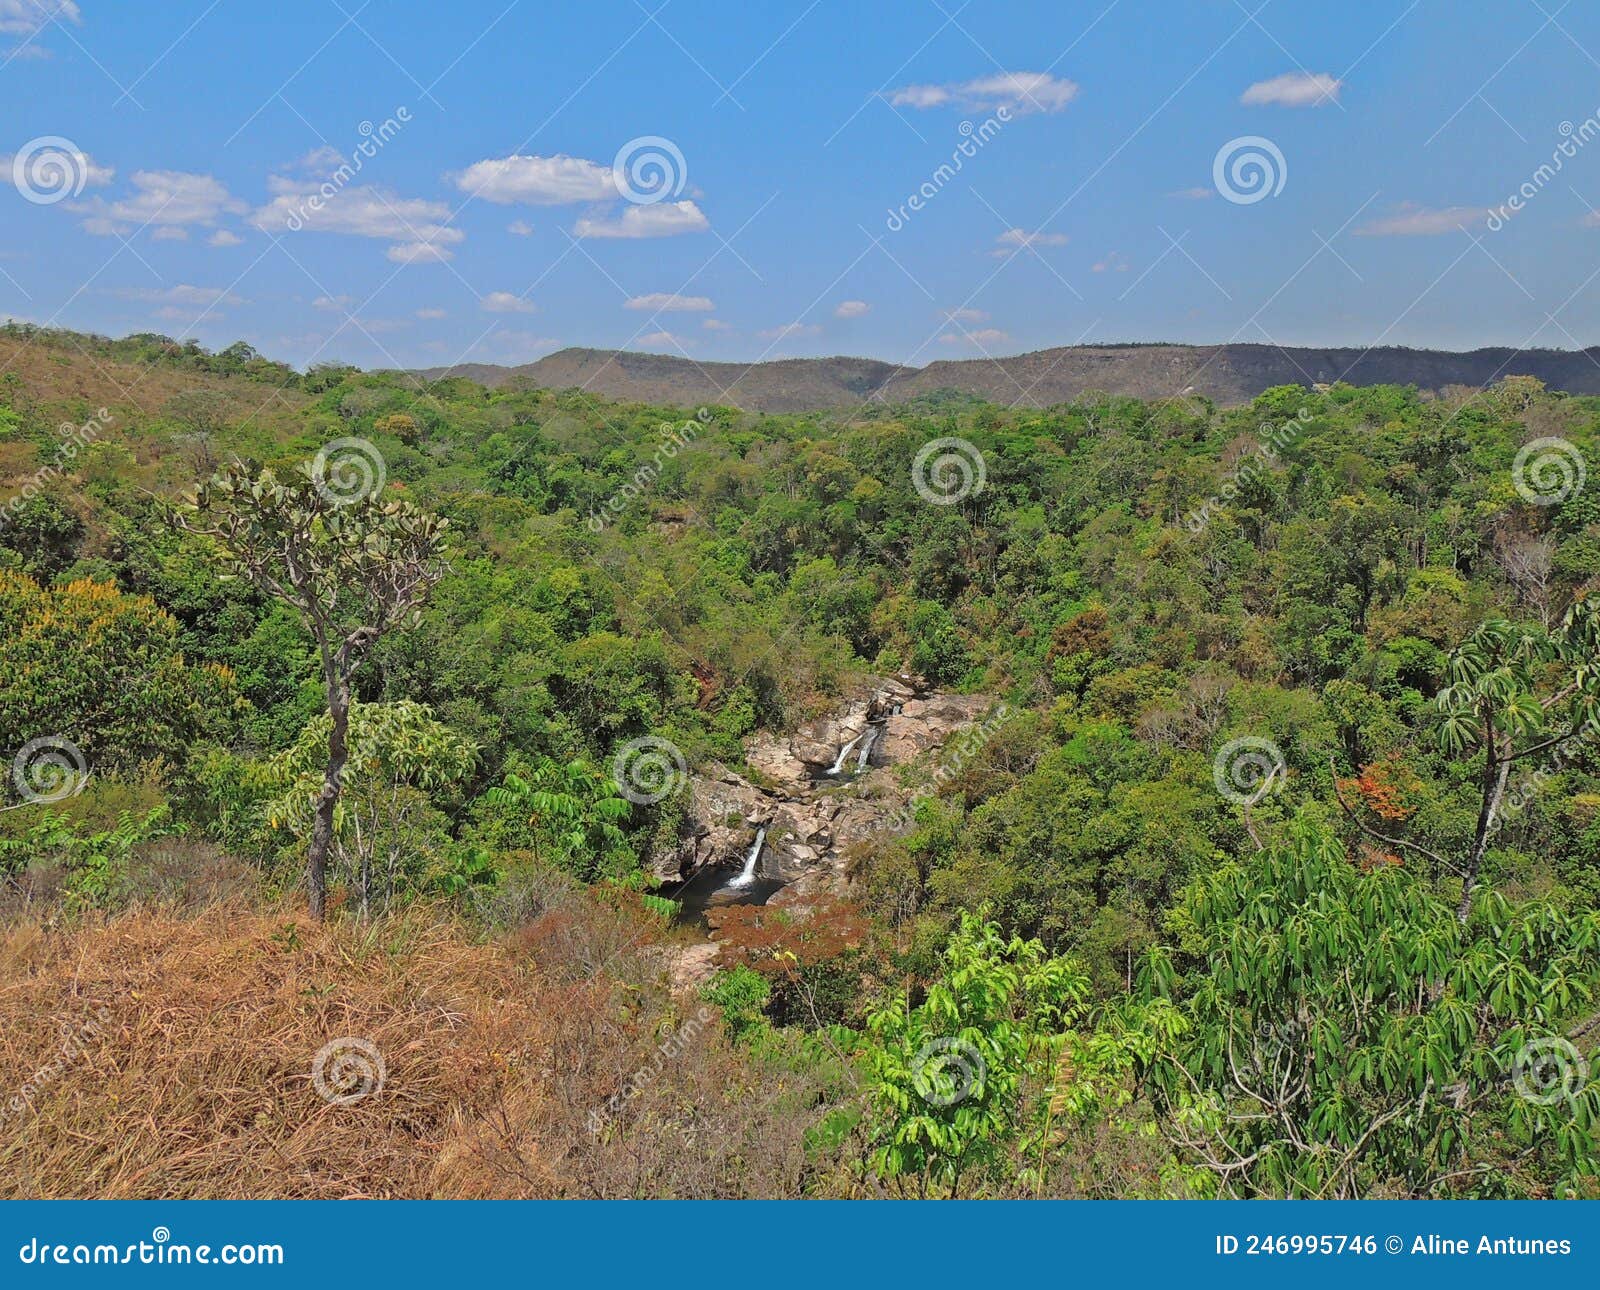 waterfalls with typical cerrado vegetation around them